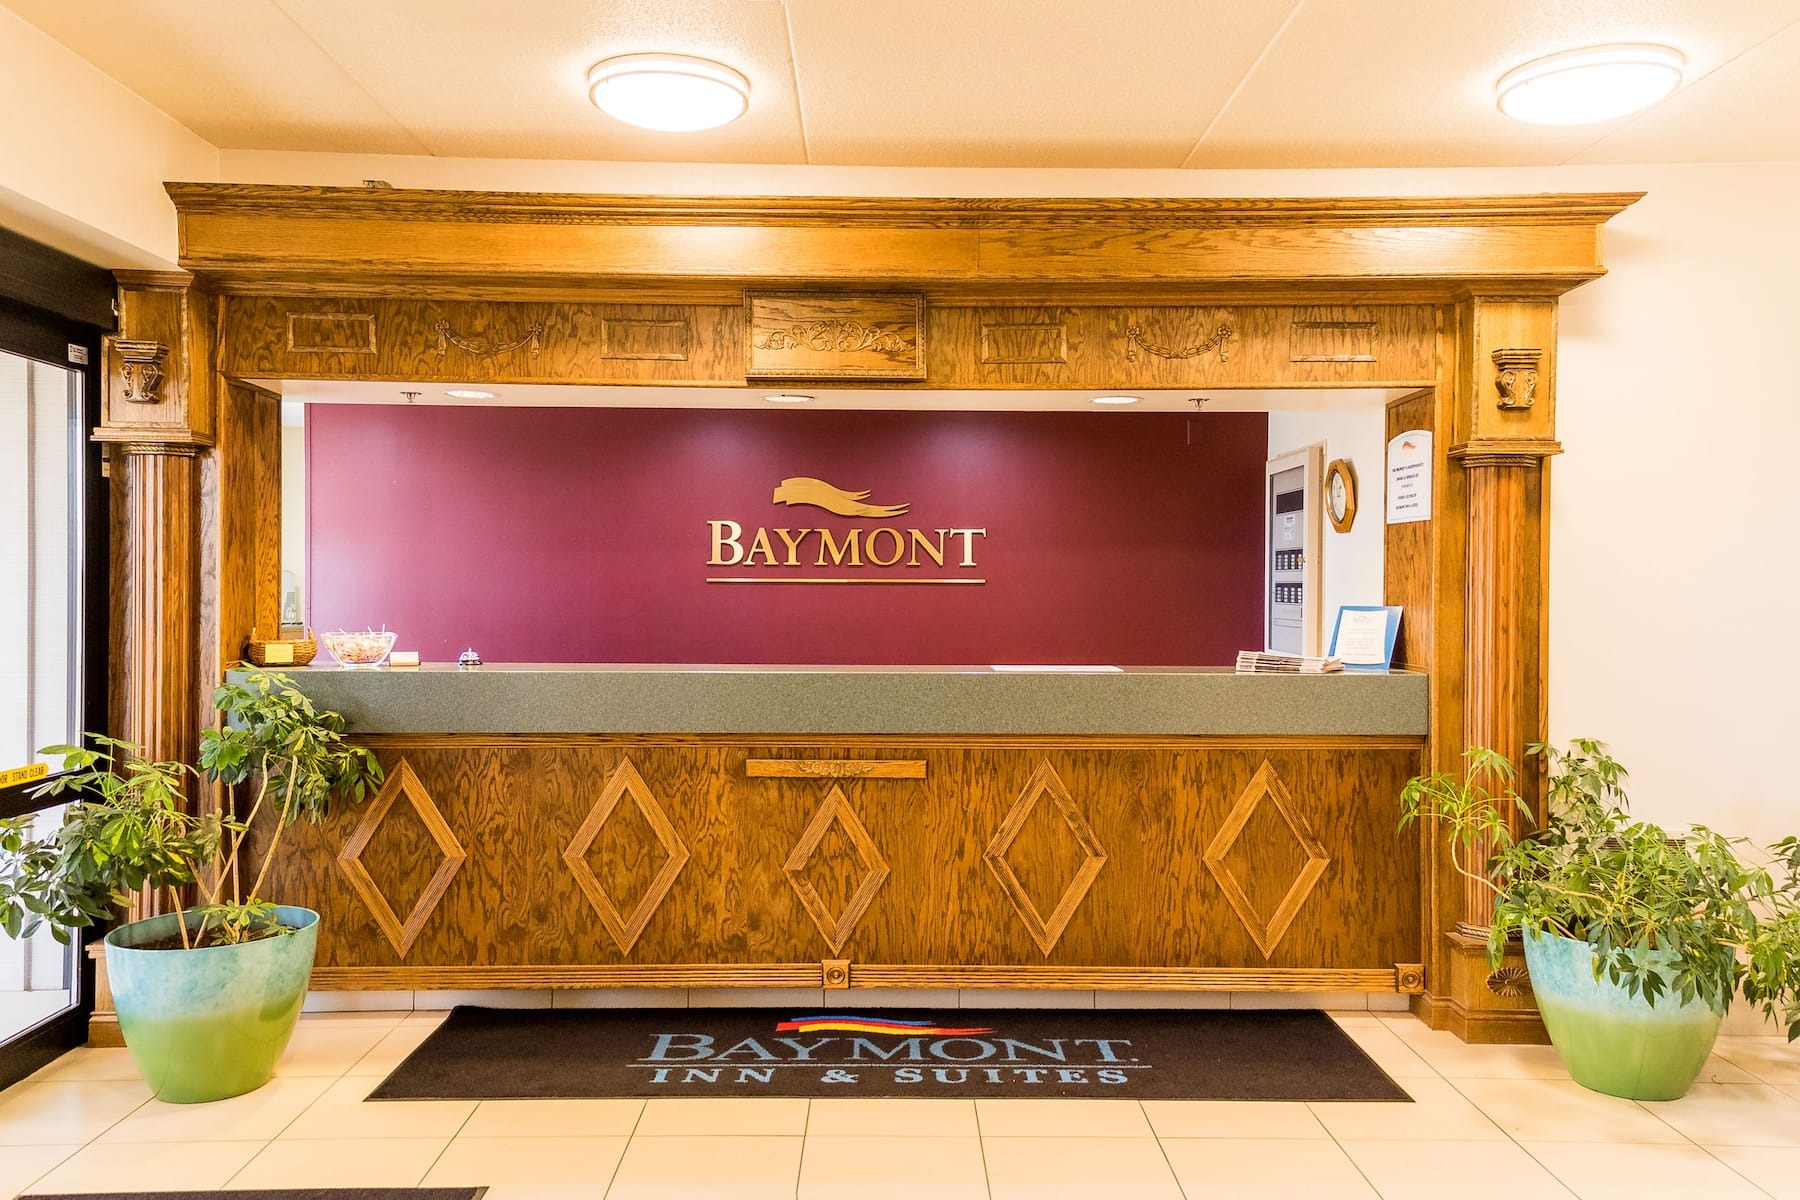 Baymont Inn & Suites by Wyndham Lafayette / Purdue Area Hotel Signage - Warm Welcome Awaits